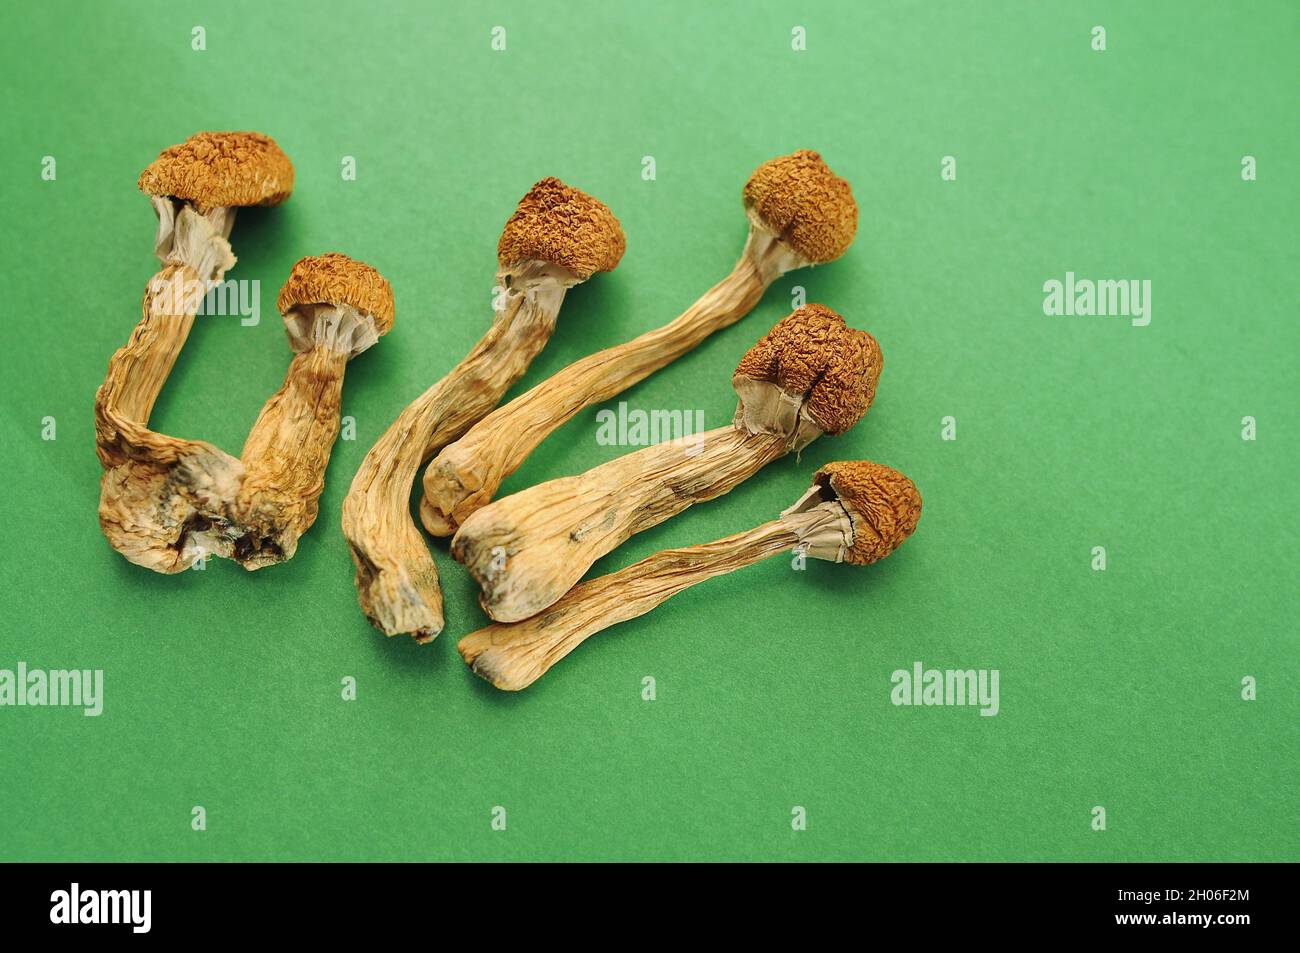 Dried psilocybin mushrooms on green background. Psychedelic magic mushroom Golden Teacher. Medical use, antidepressant. Micro-dosing concept. Stock Photo